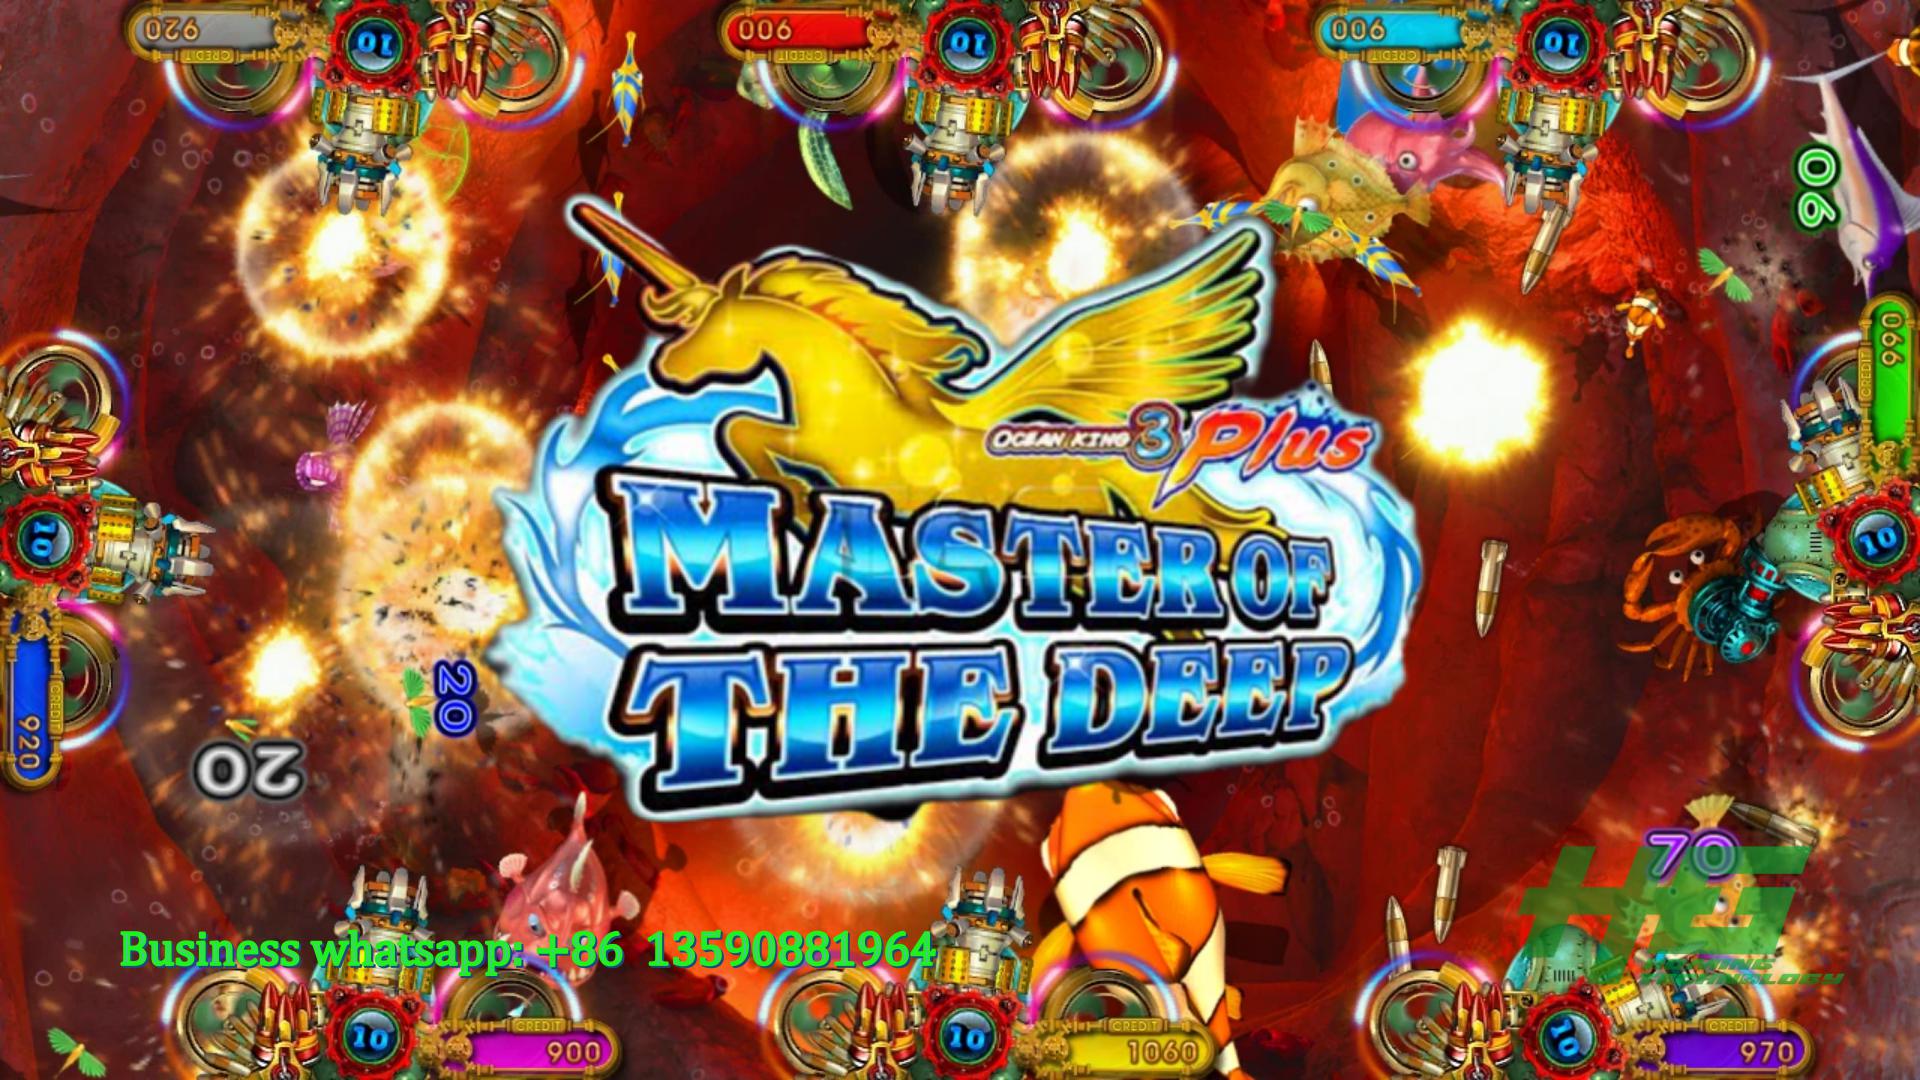 IGS Original Ocean King 3 Plus Master of the Deep,Ocean King 3 Plus Fish Casino Game Machine For Sale